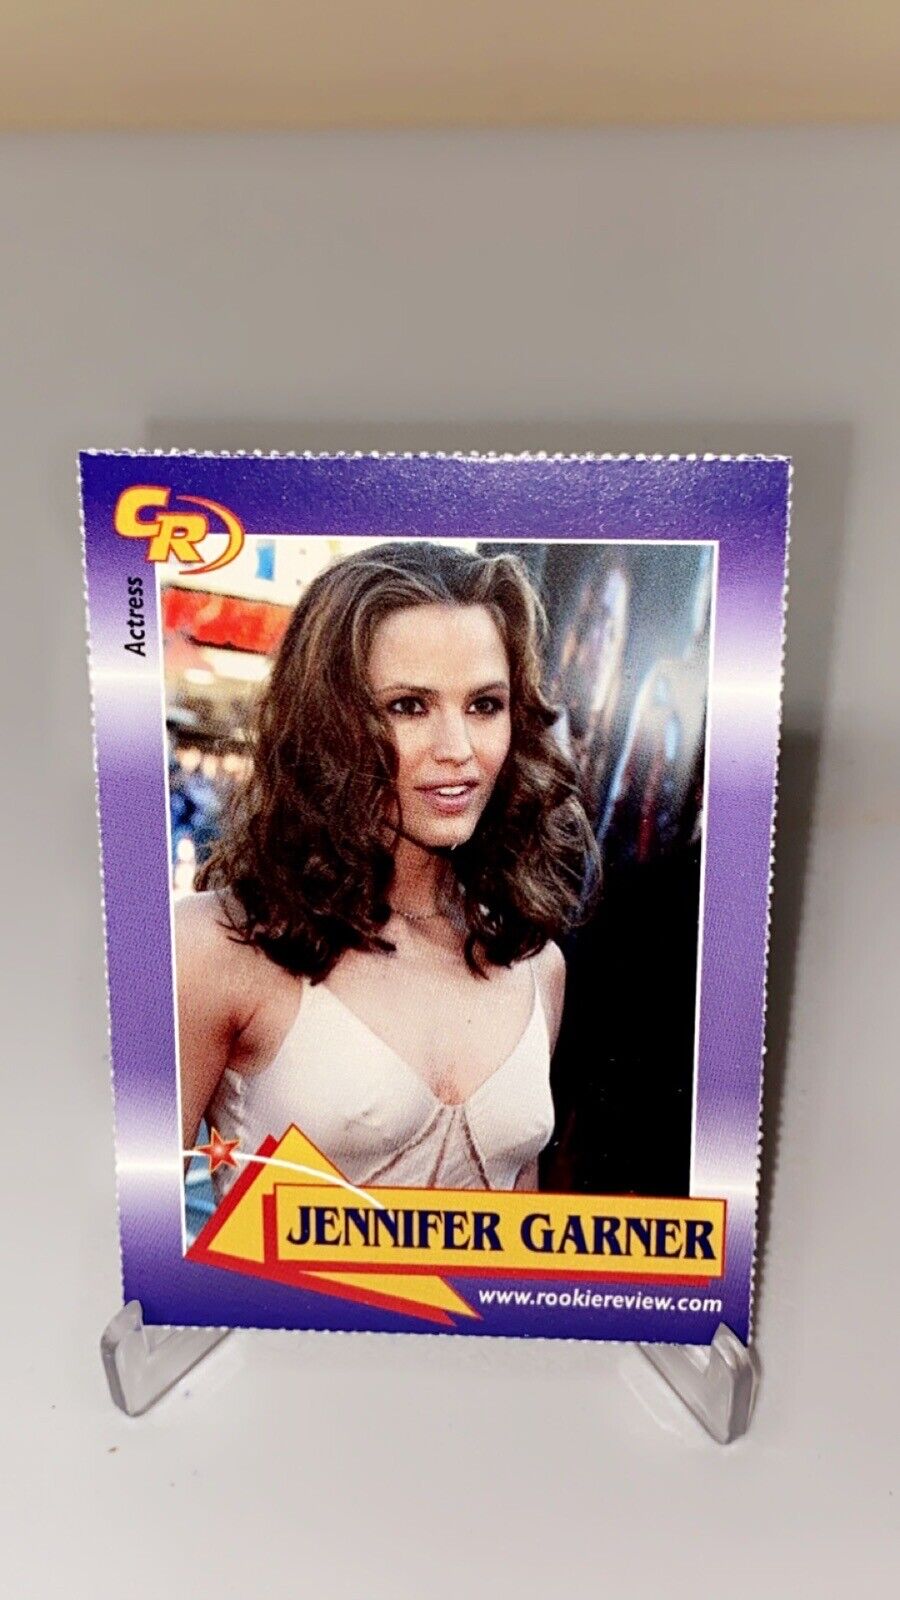 2003 Celebrity Review Jennifer Garner Rookie Review Actress Card #11